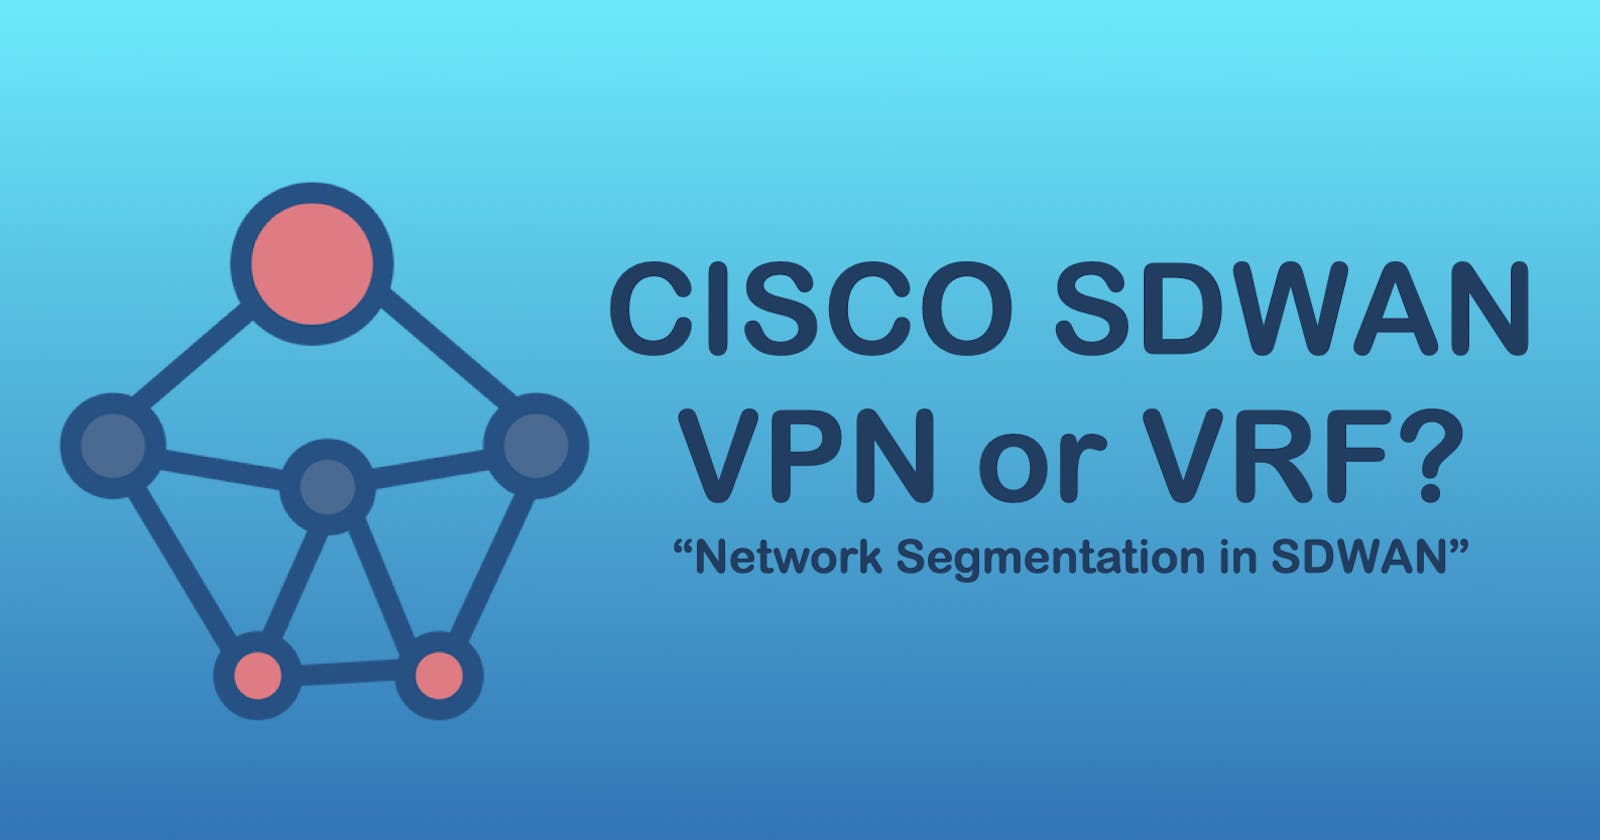 [Part 3] Cisco SDWAN VPN Segmentation or VRF?